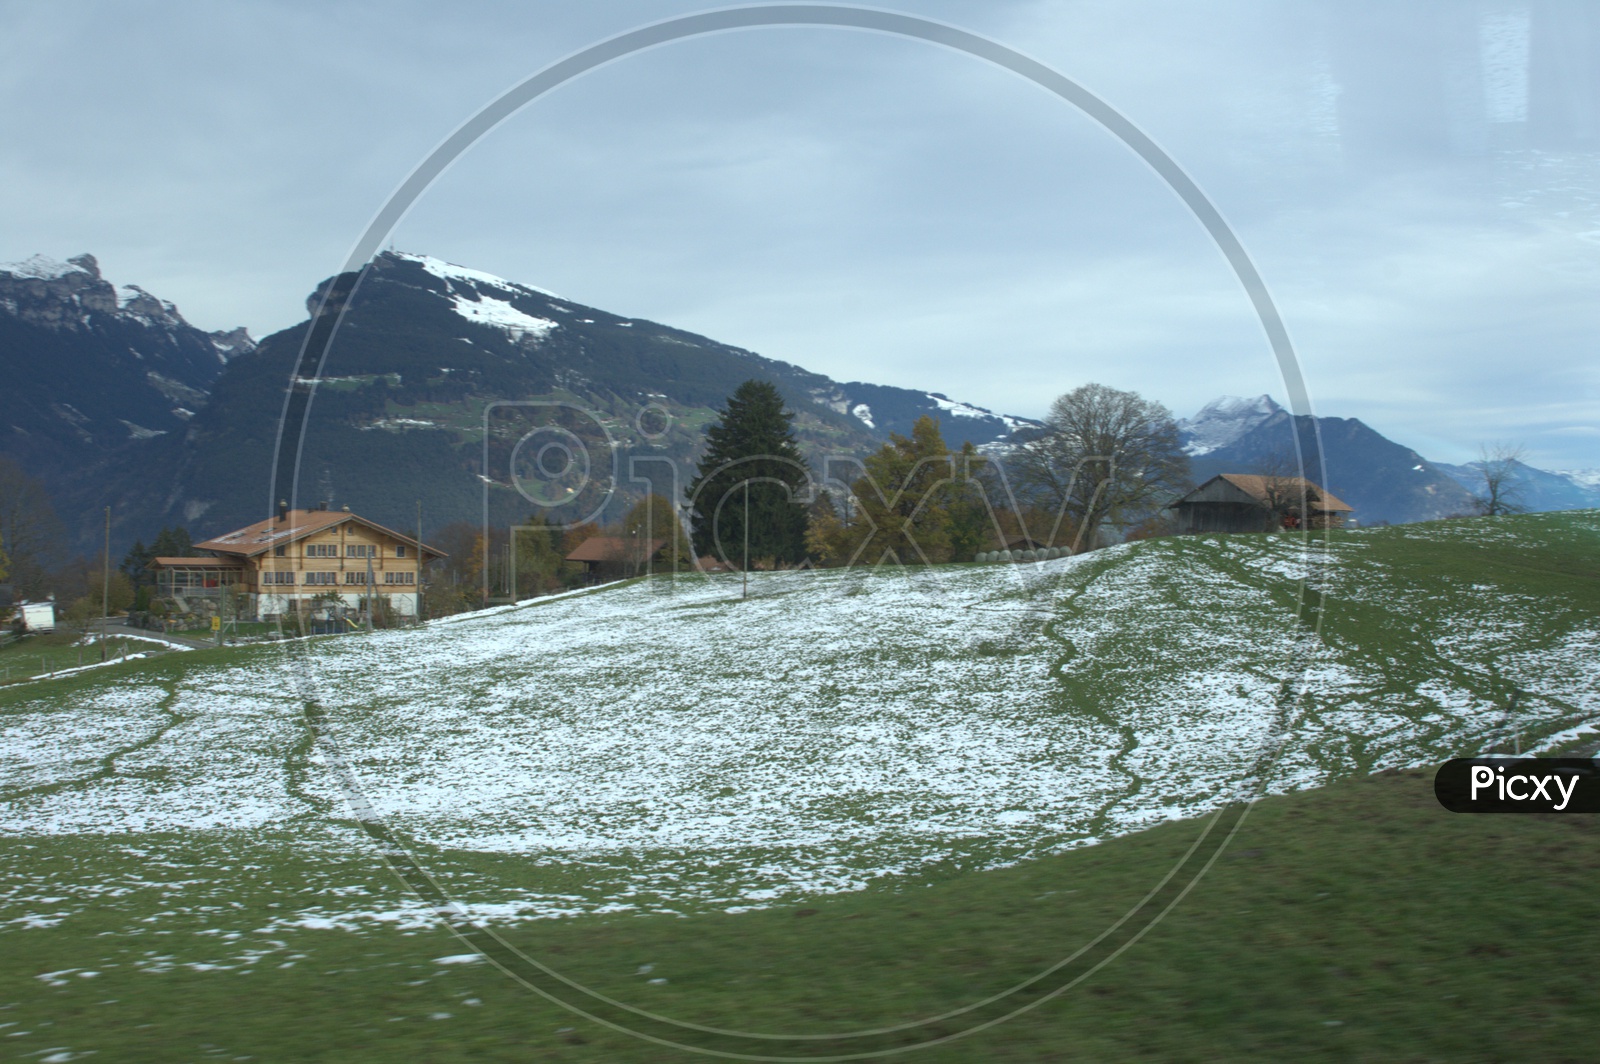 Snow on the grass alongside the Swiss alps